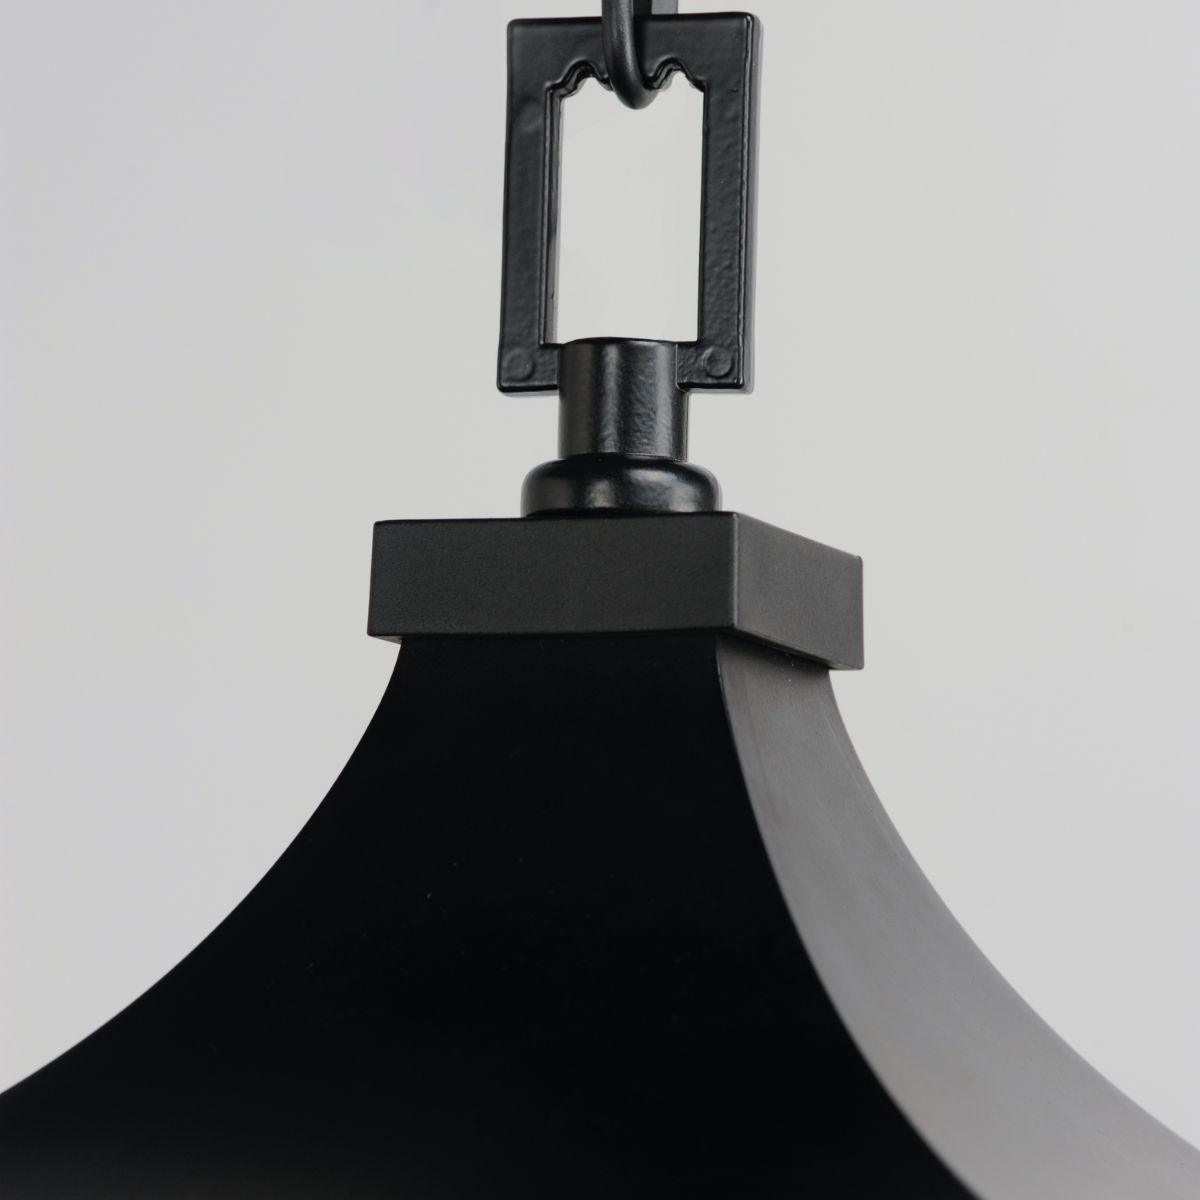 SUTTON PLACE VX 24 in. 2 Lights Outdoor Hanging Lantern Black finish